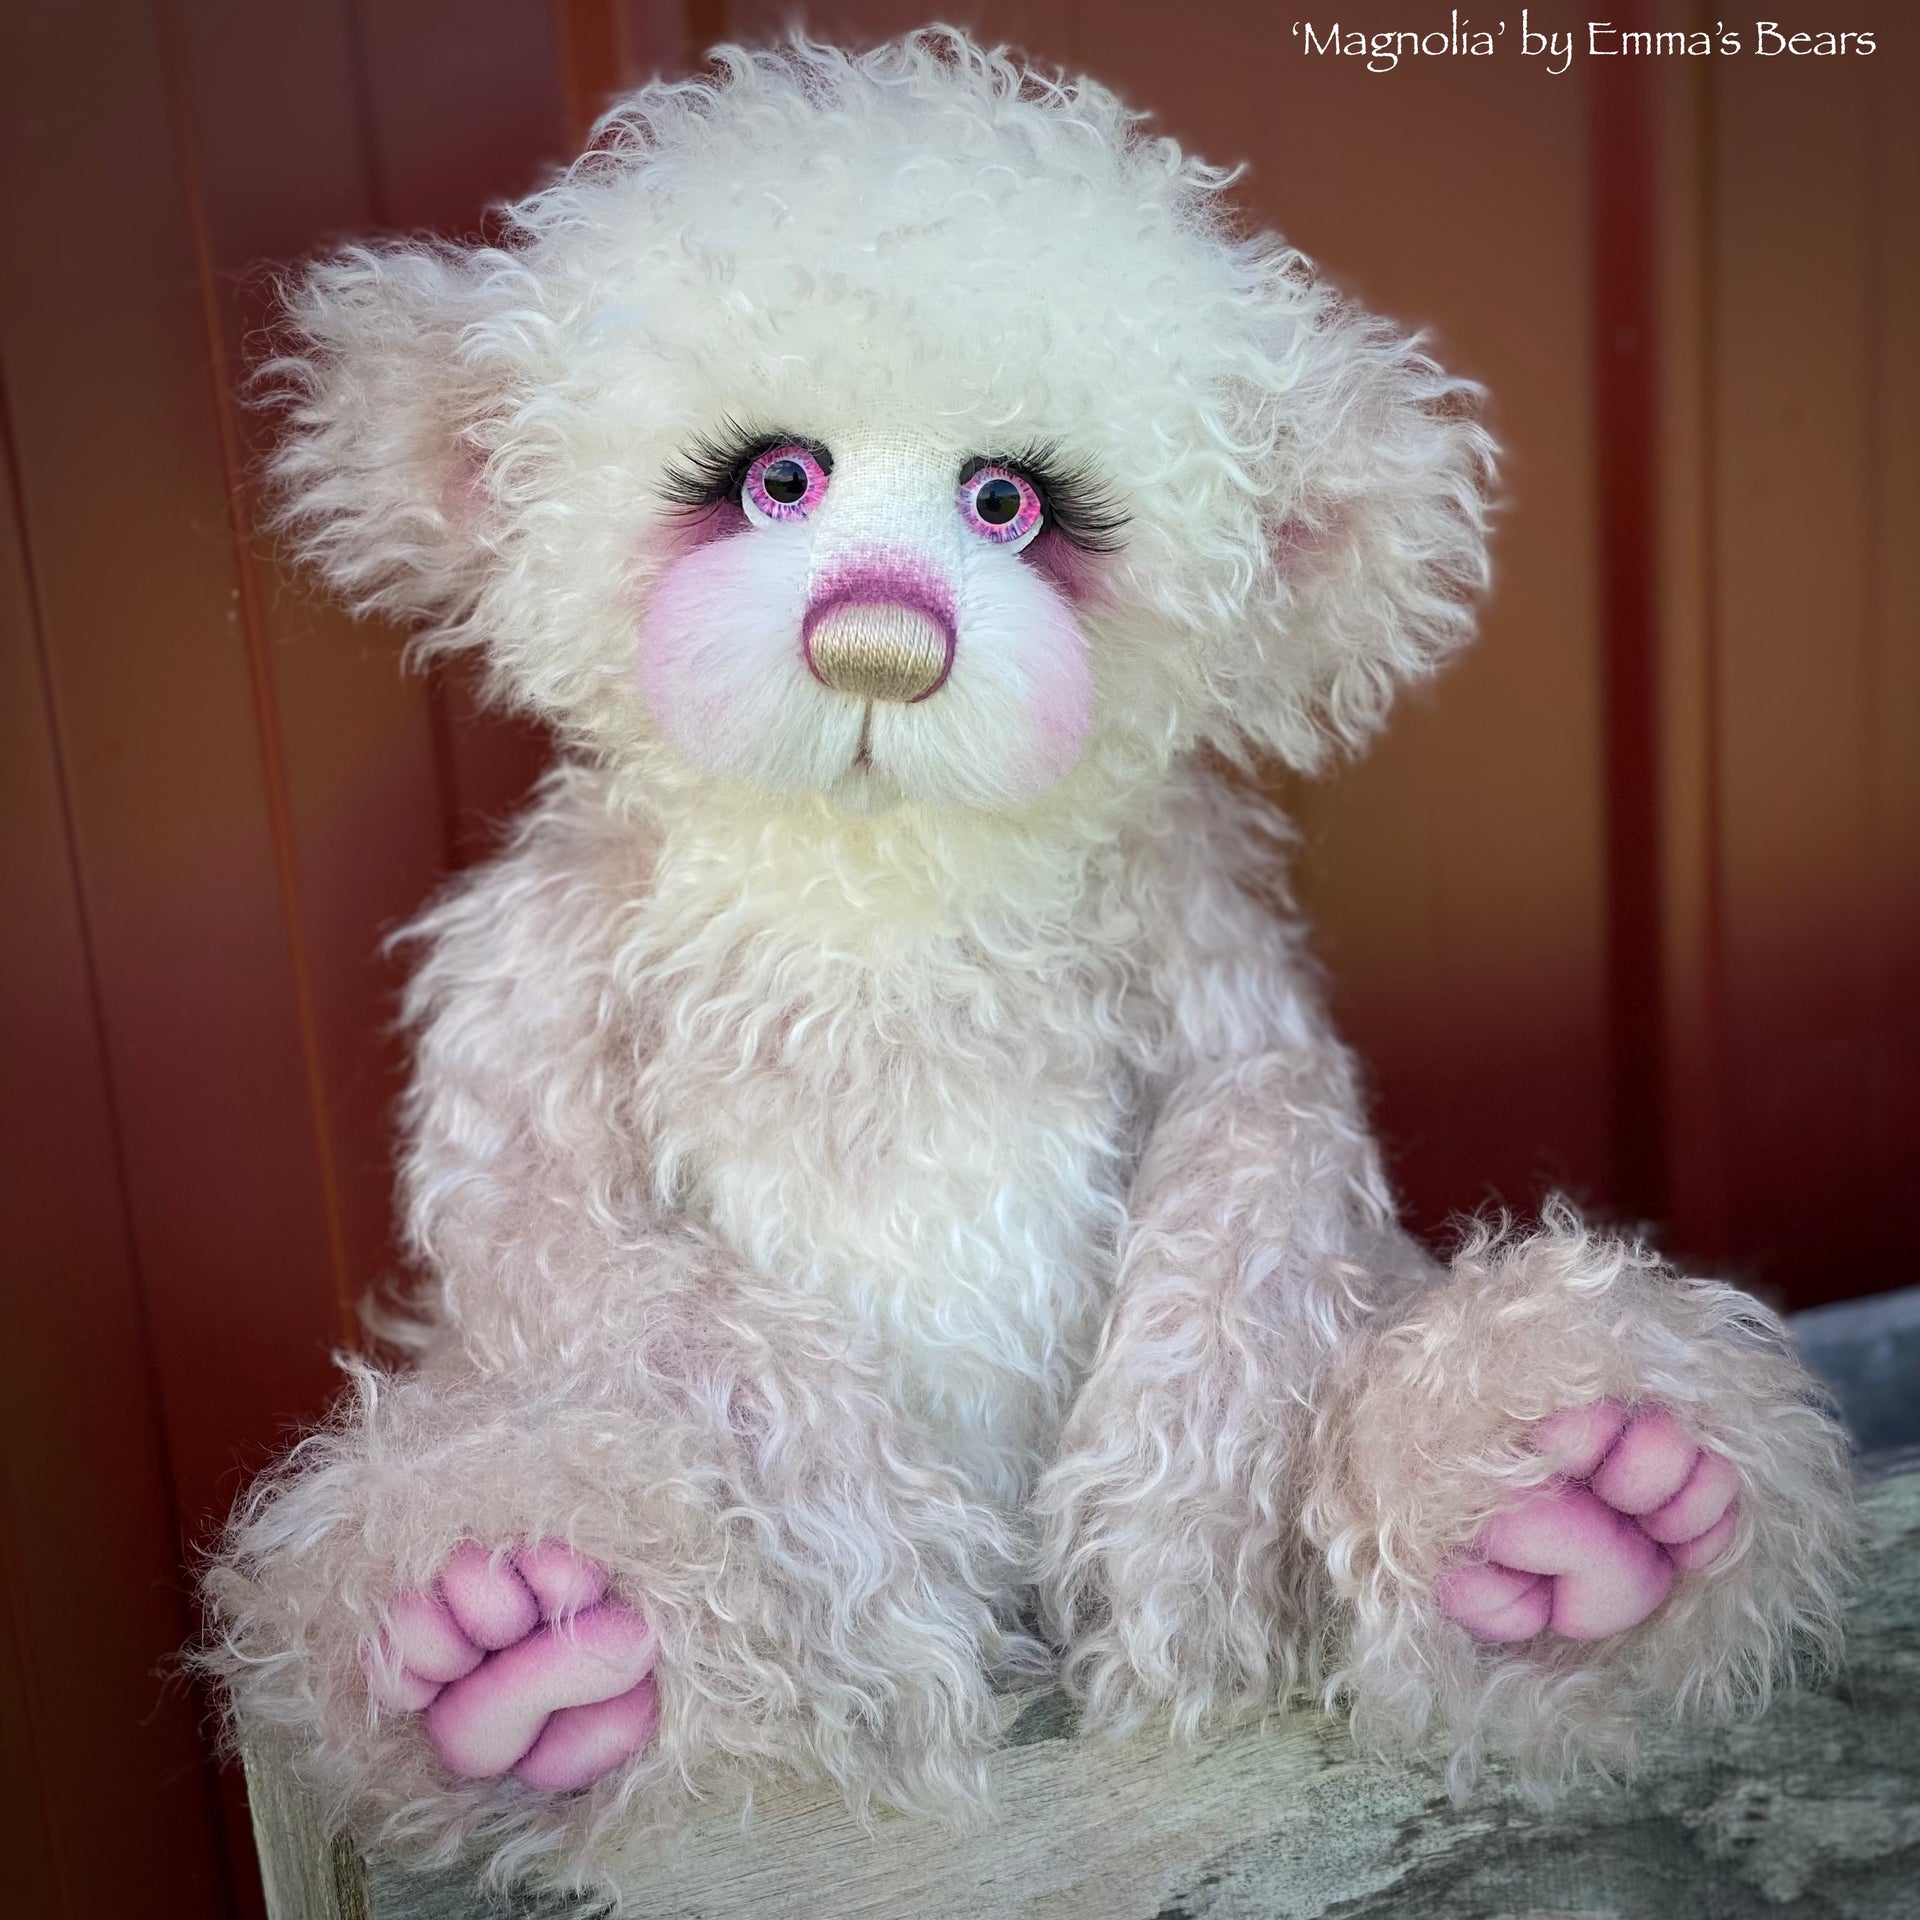 Magnolia - 16" Hand-dyed Curlylocks and Alpaca artist bear by Emma's Bears - OOAK